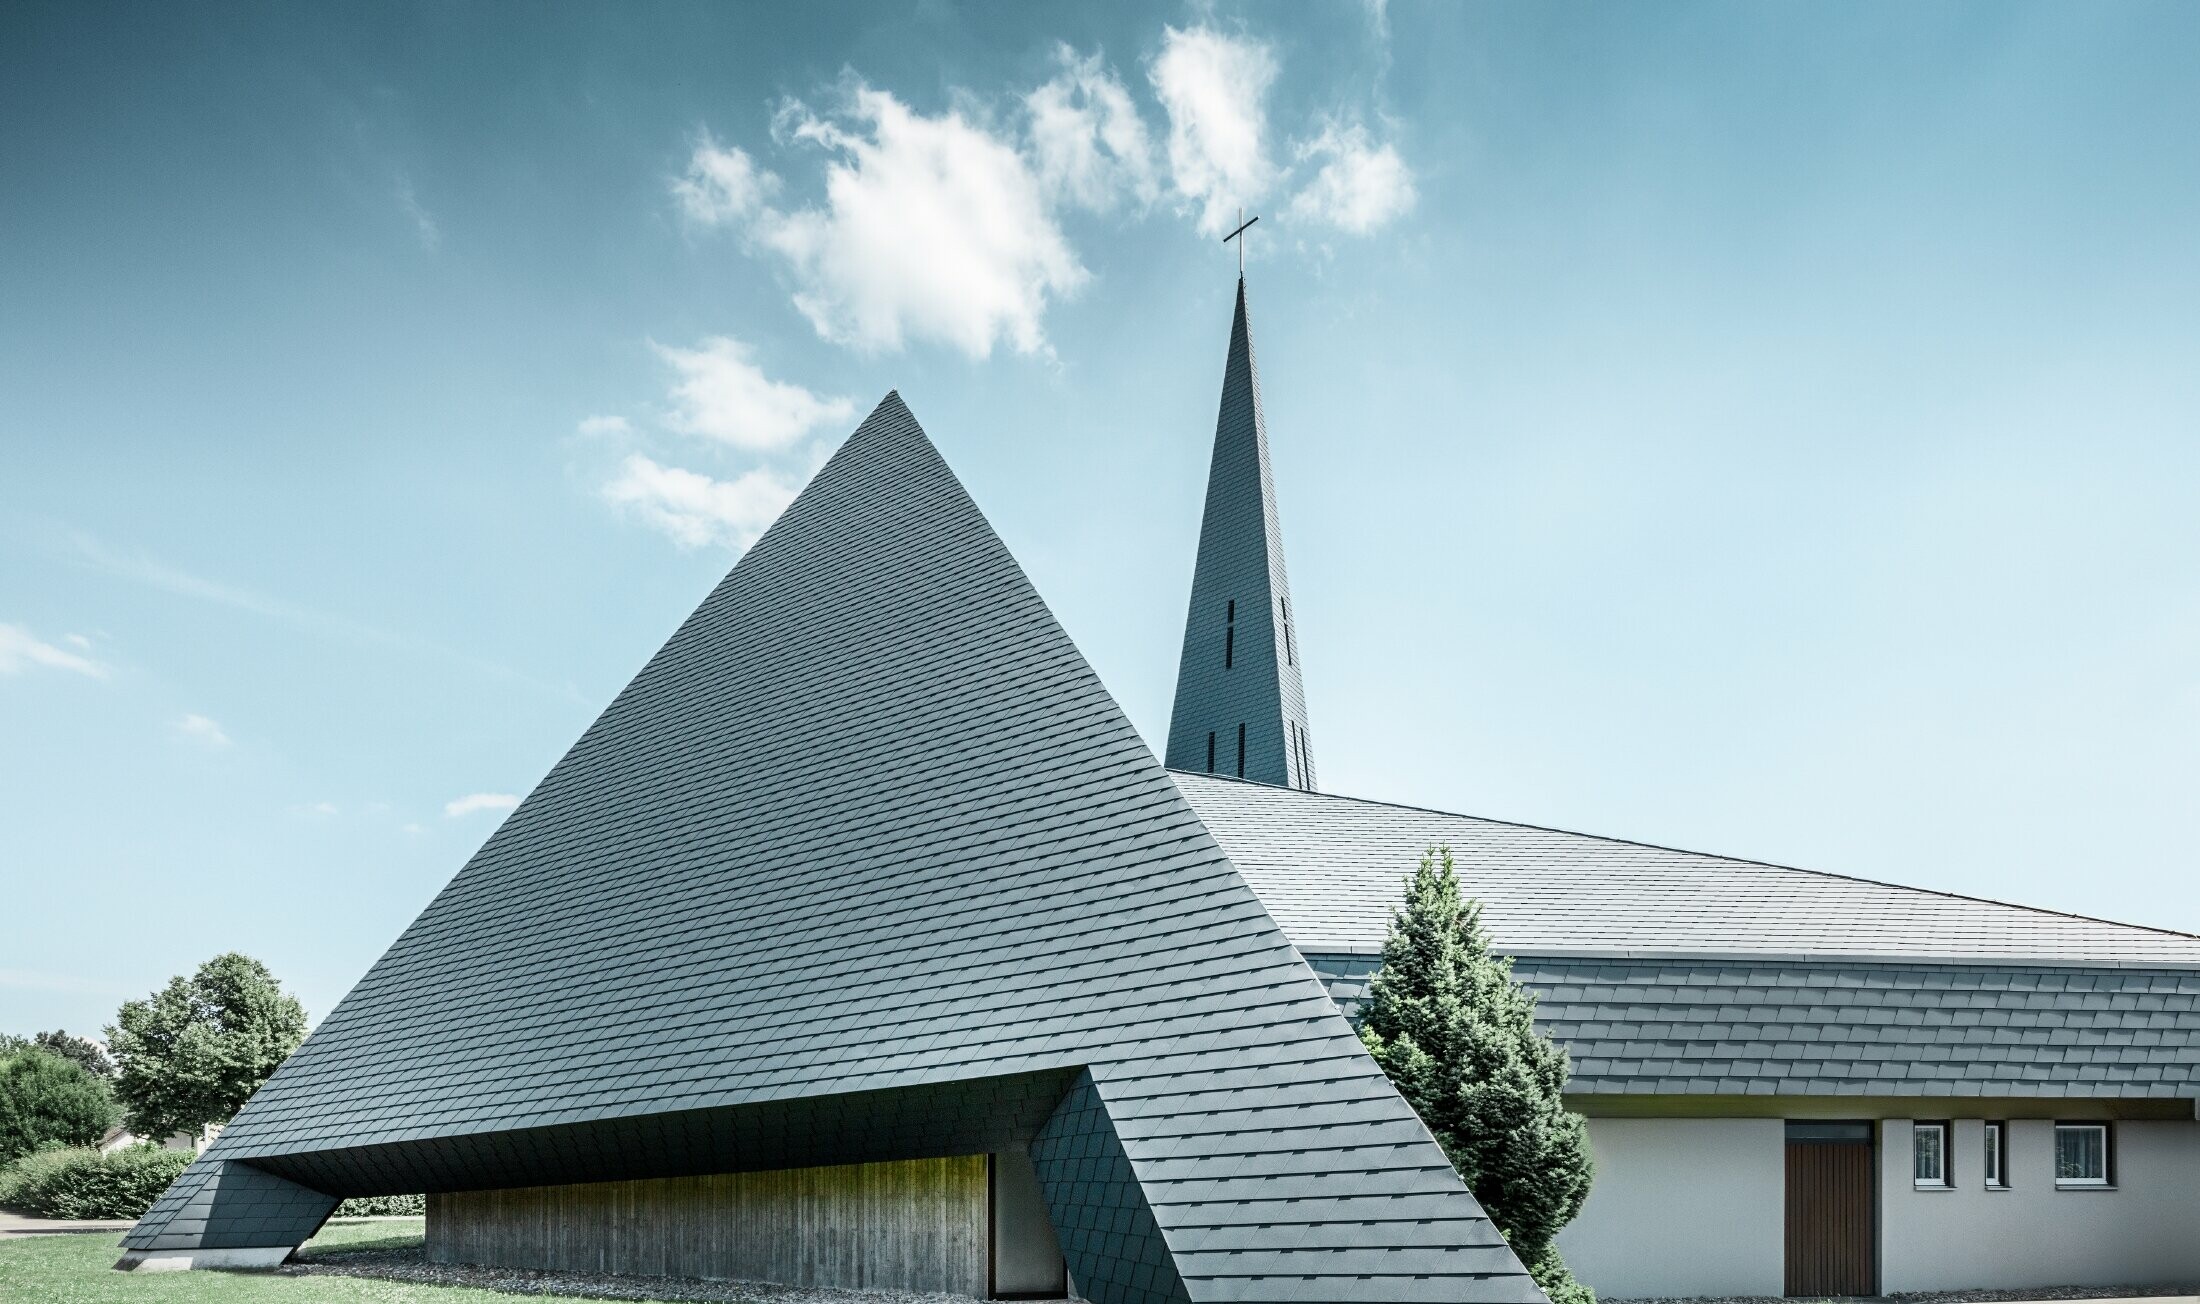 piramis formájú katolikus templom Langenauban antracit színű PREFA alumínium zsindellyel.